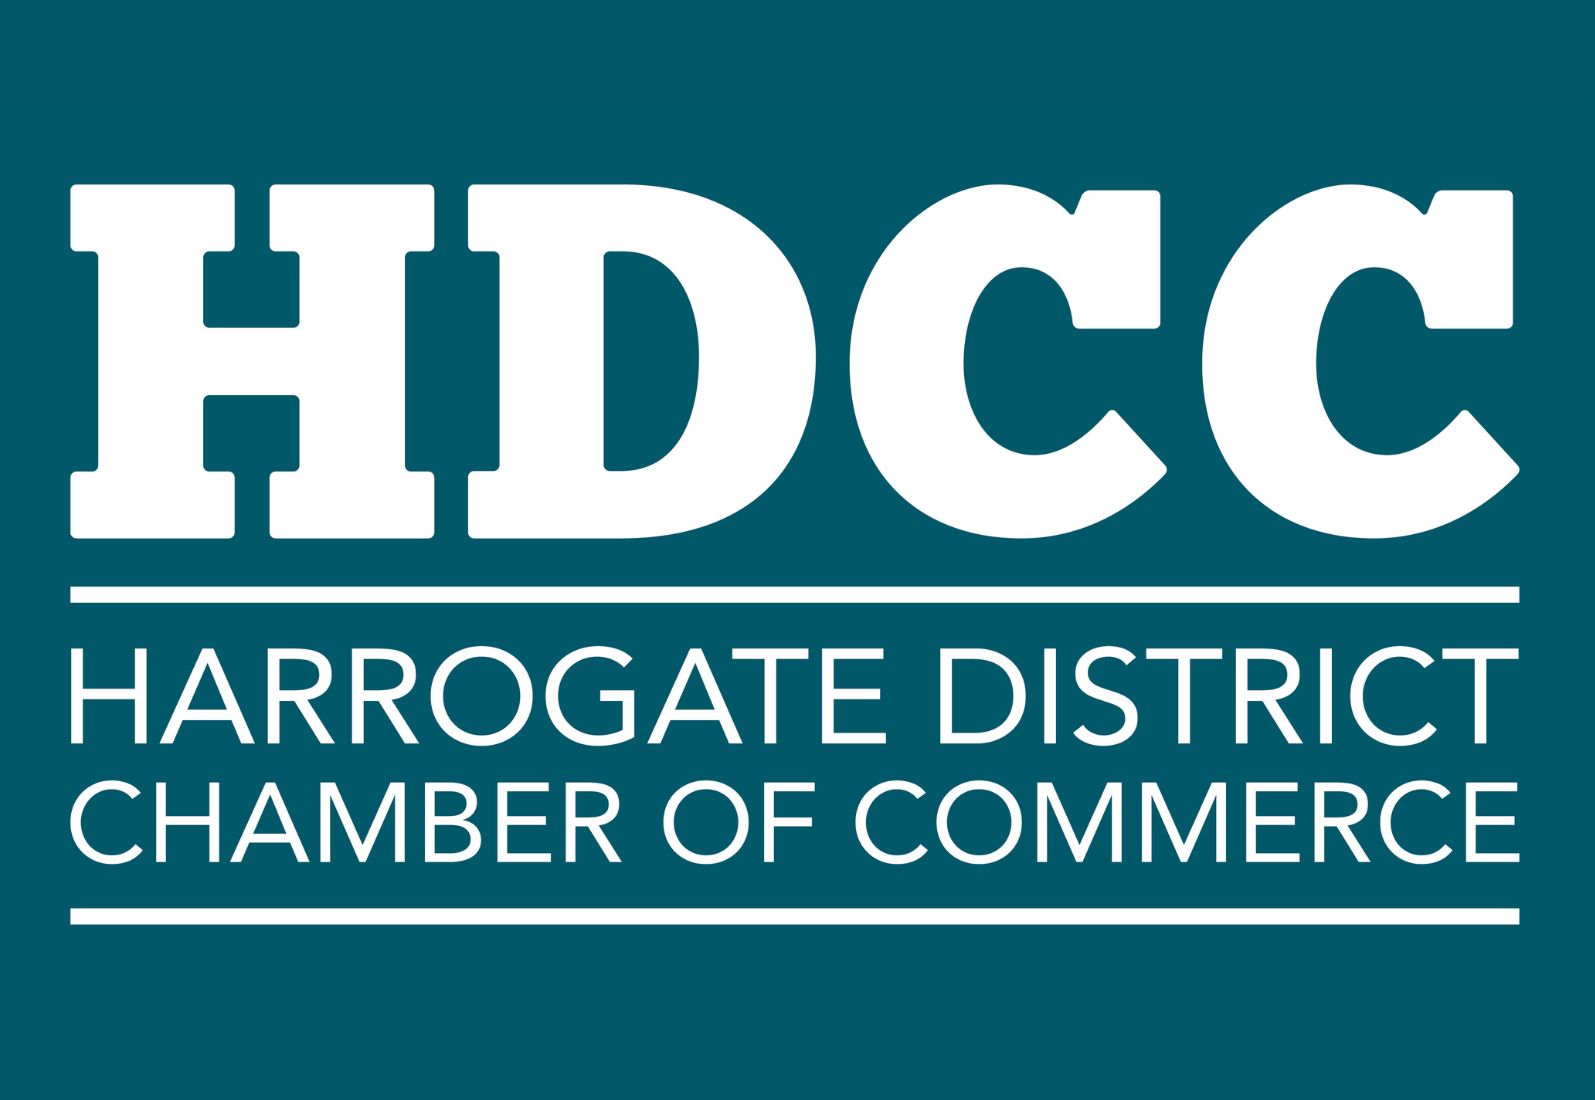 Harrogate District Chamber of Commerce has become a corporate friend of Harrogate International Festivals